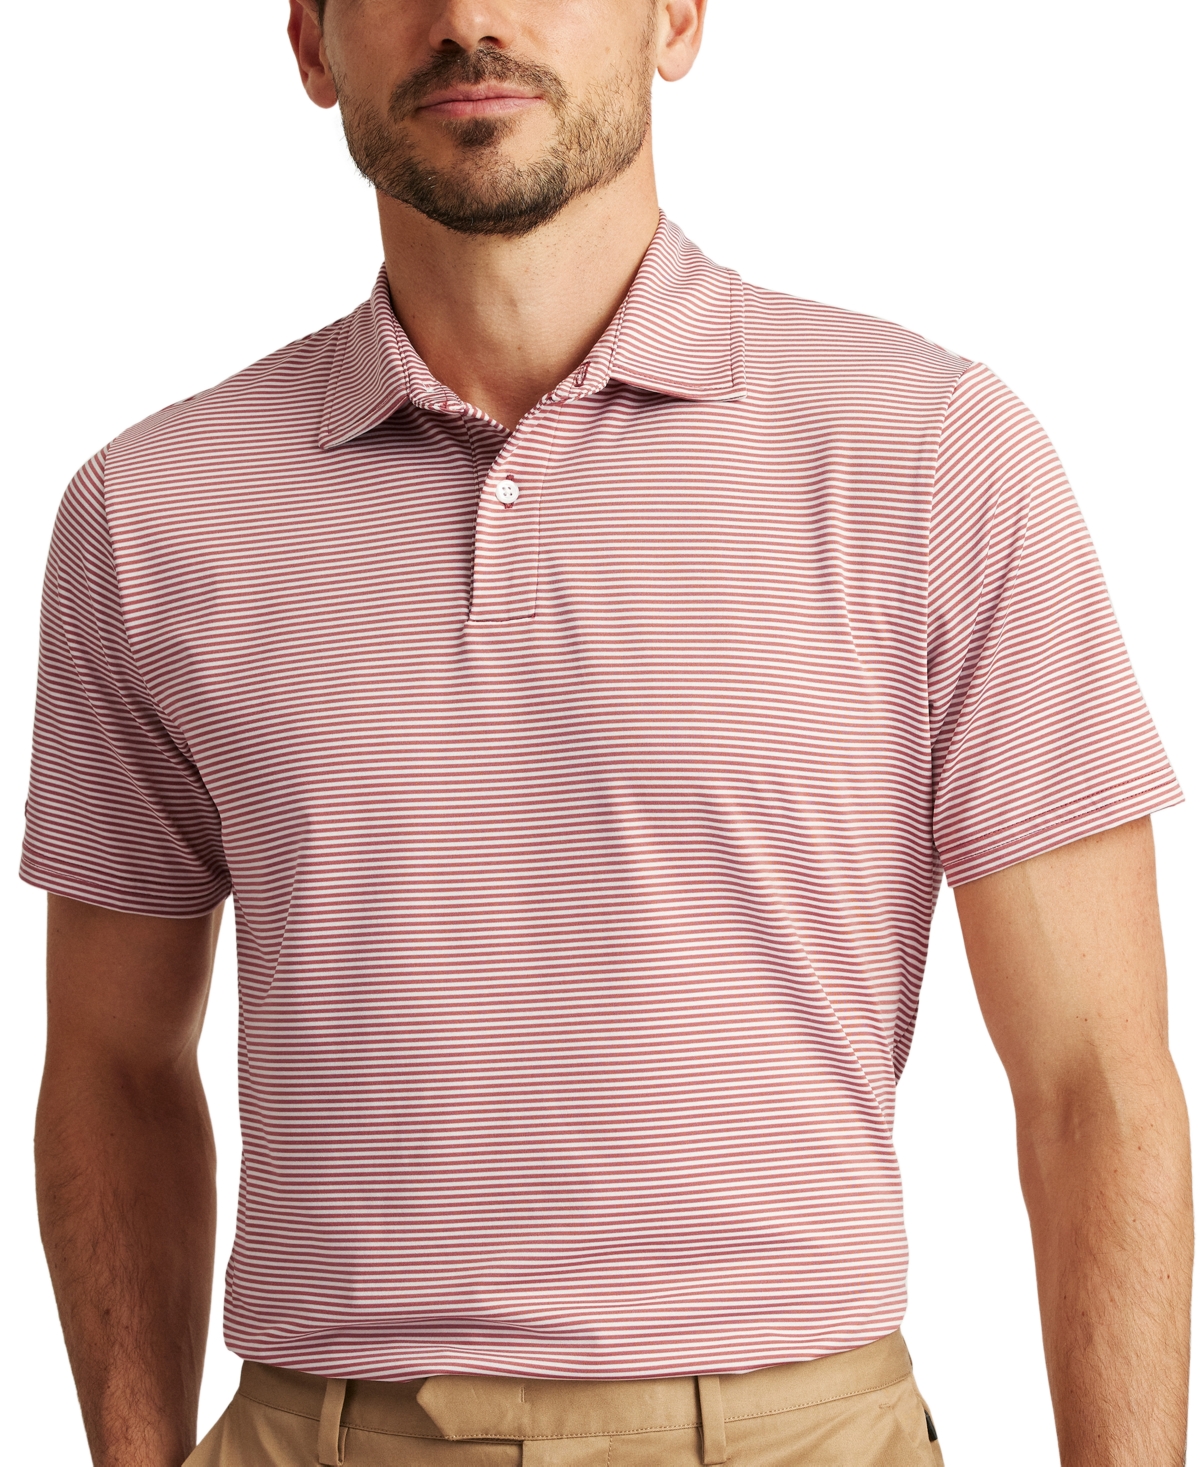 Men's Stripe Performance Golf Polo Shirt - Vermazza S